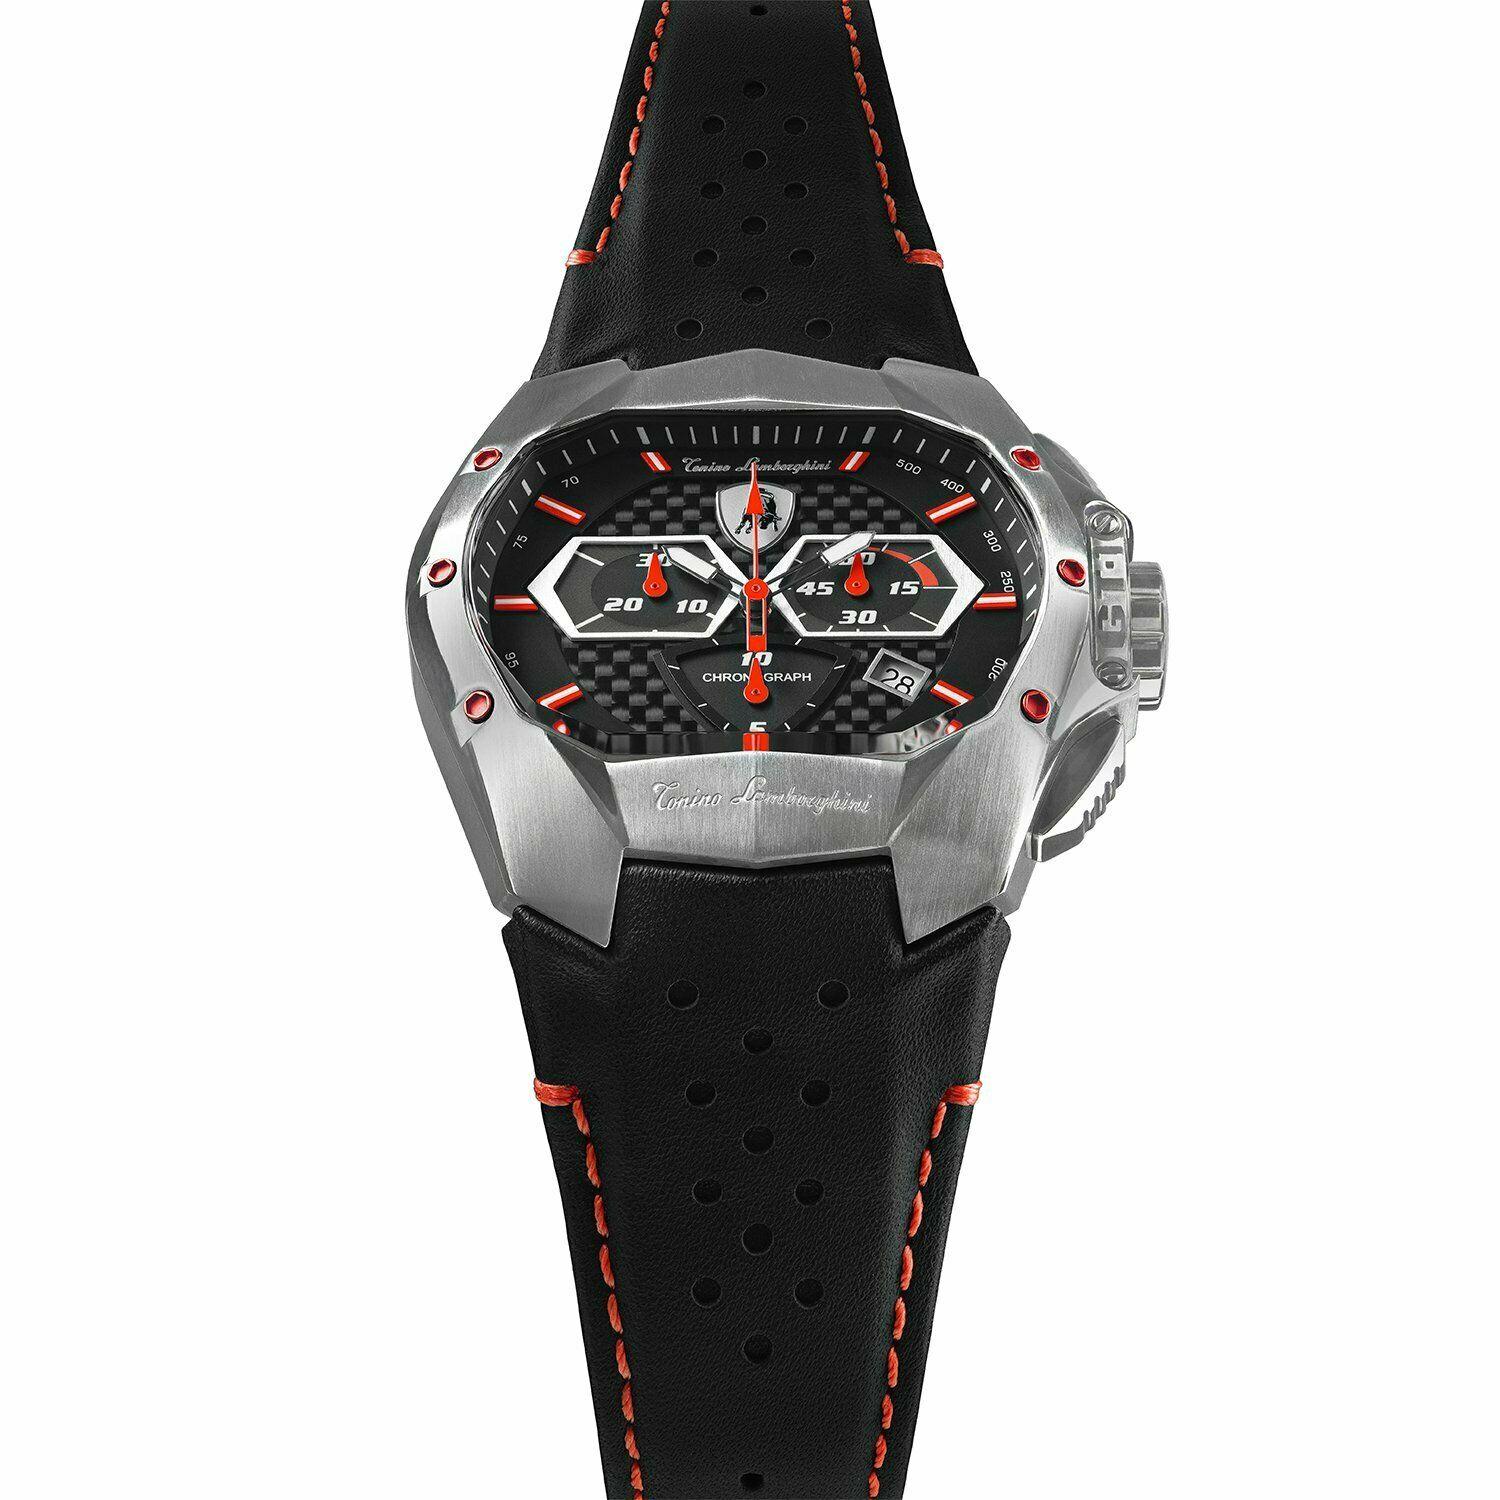 Zegarek męski Tonino Lamborghini T9GA + Dodatkowy pasek